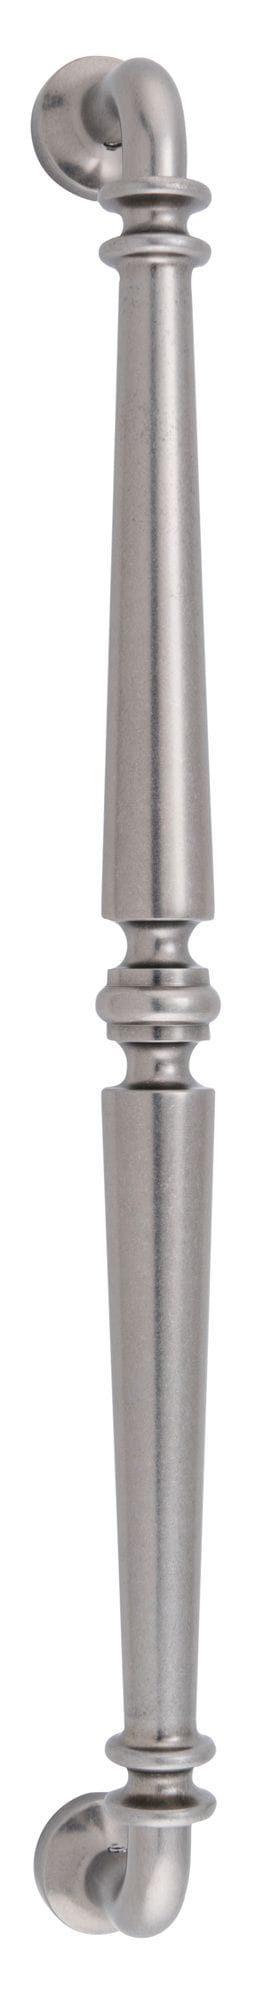 Sarlat Pull Handle Distressed Nickel 450mm